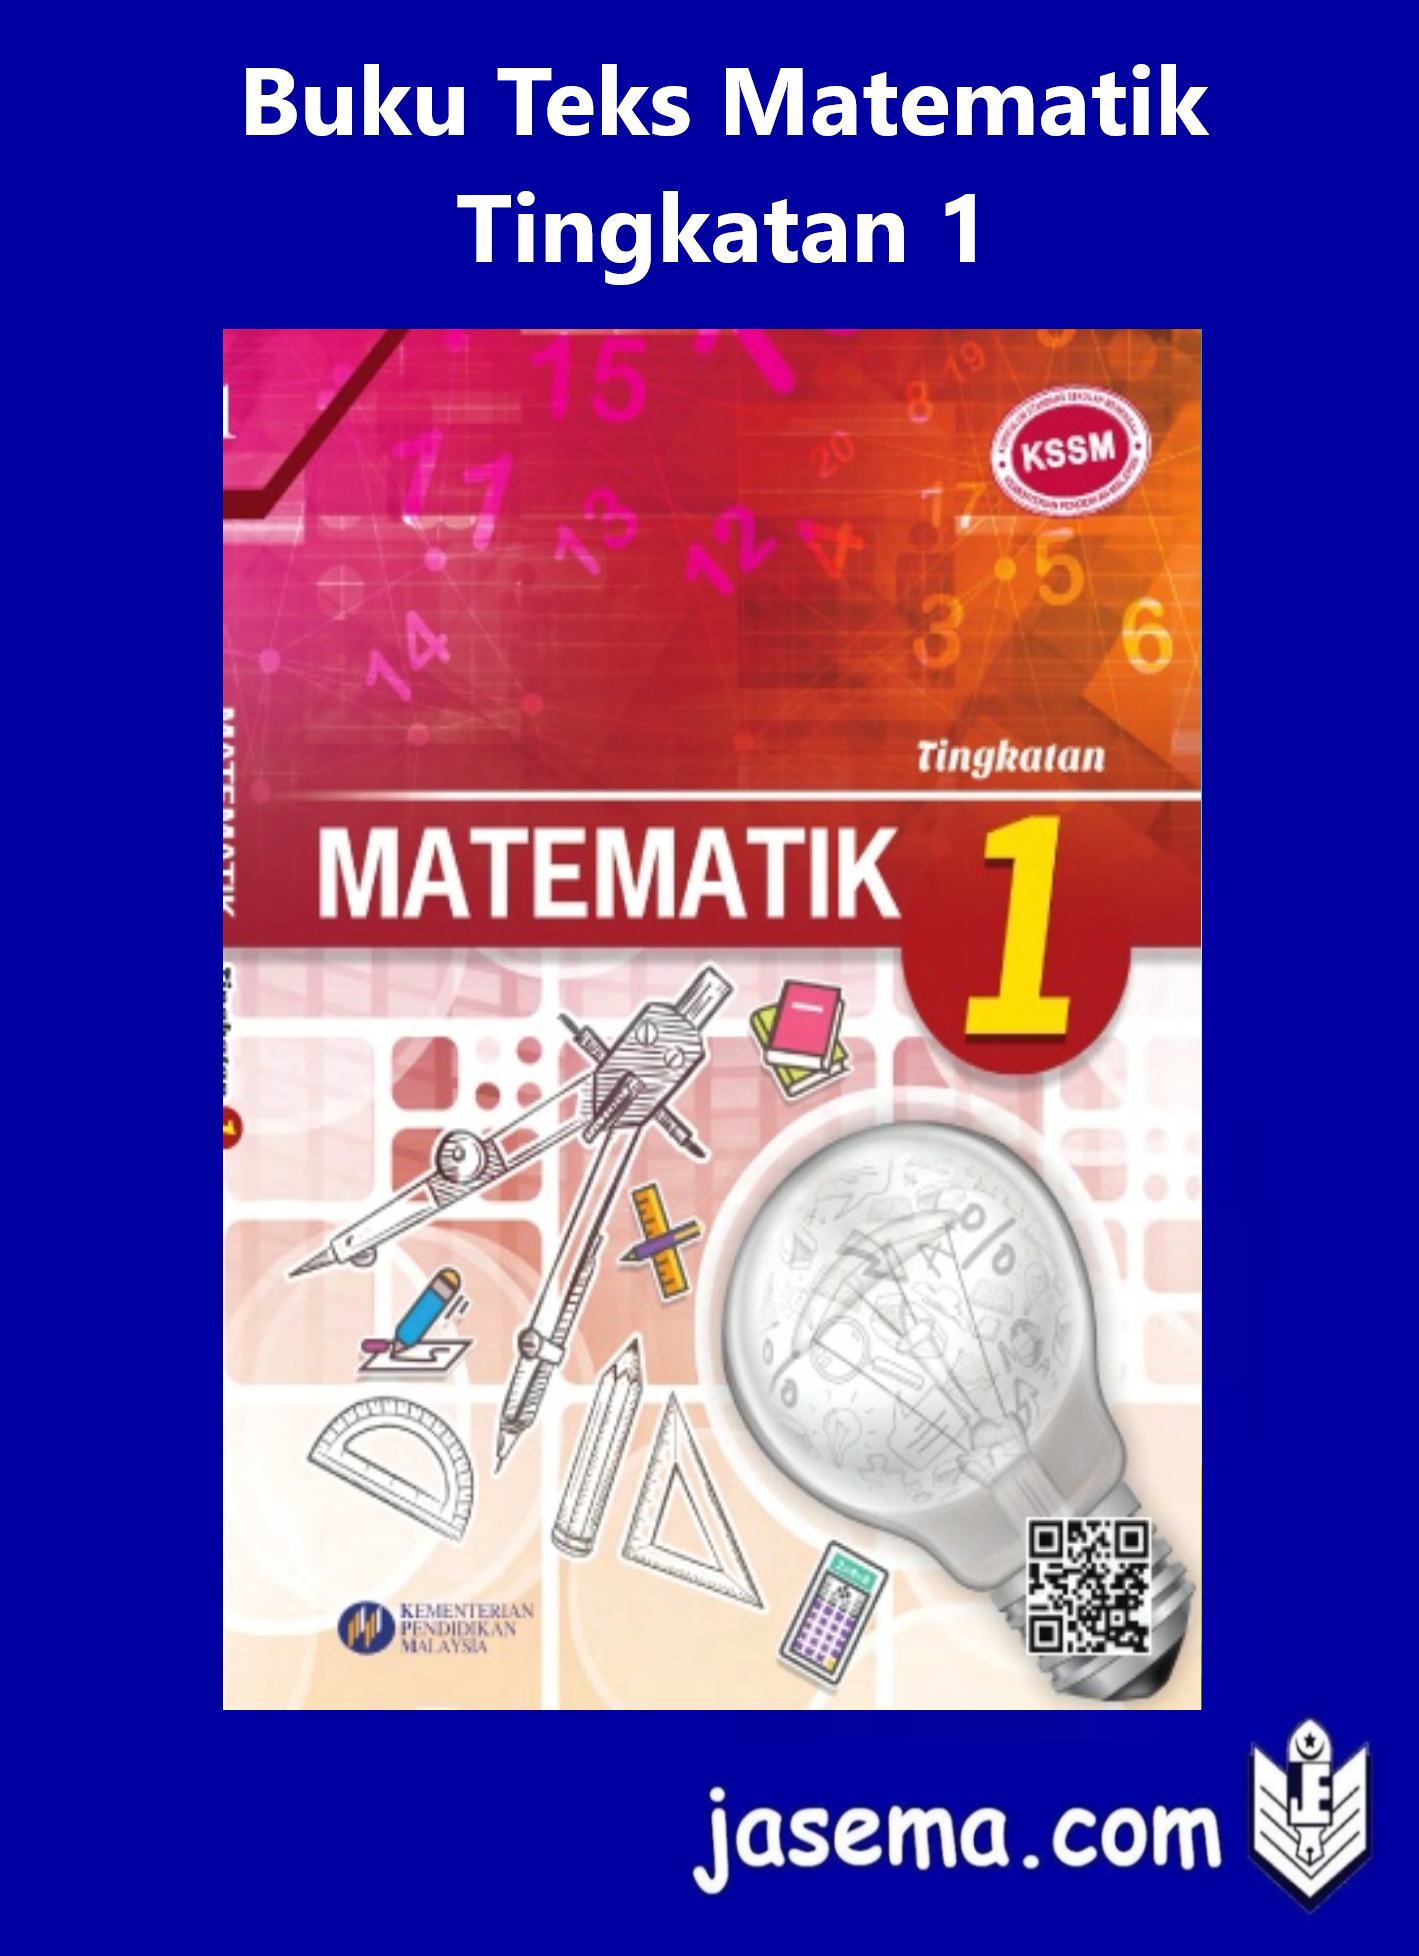 Shop Buku Teks Matematik Tingkatan 1 Online May 2022 Lazada Com My